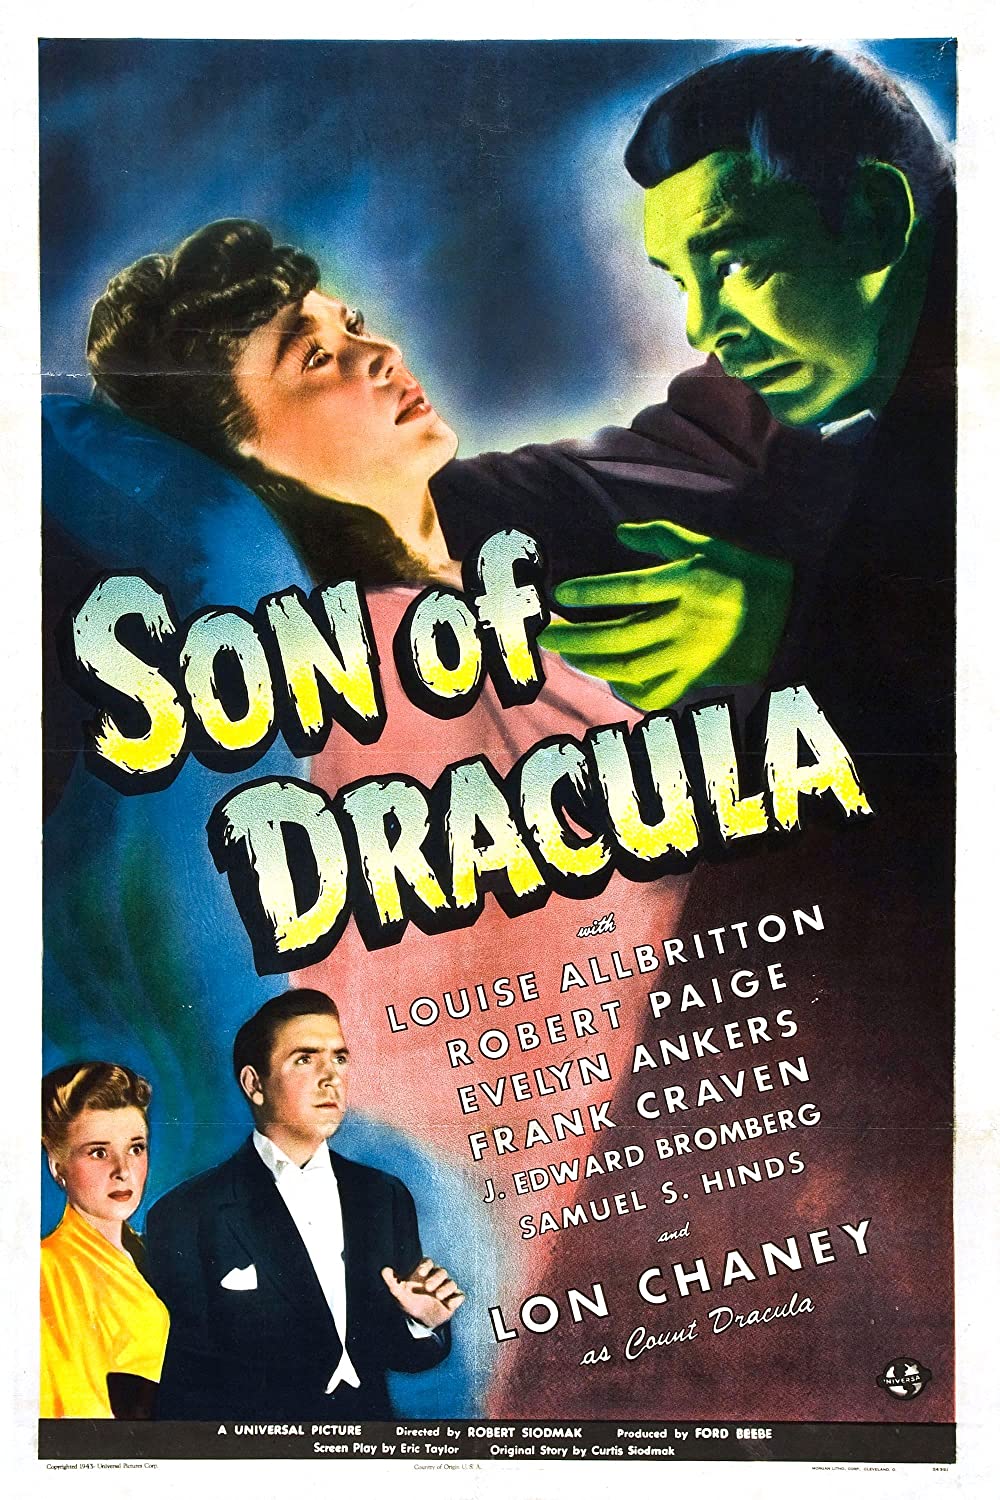 Filmbeschreibung zu Son of Dracula